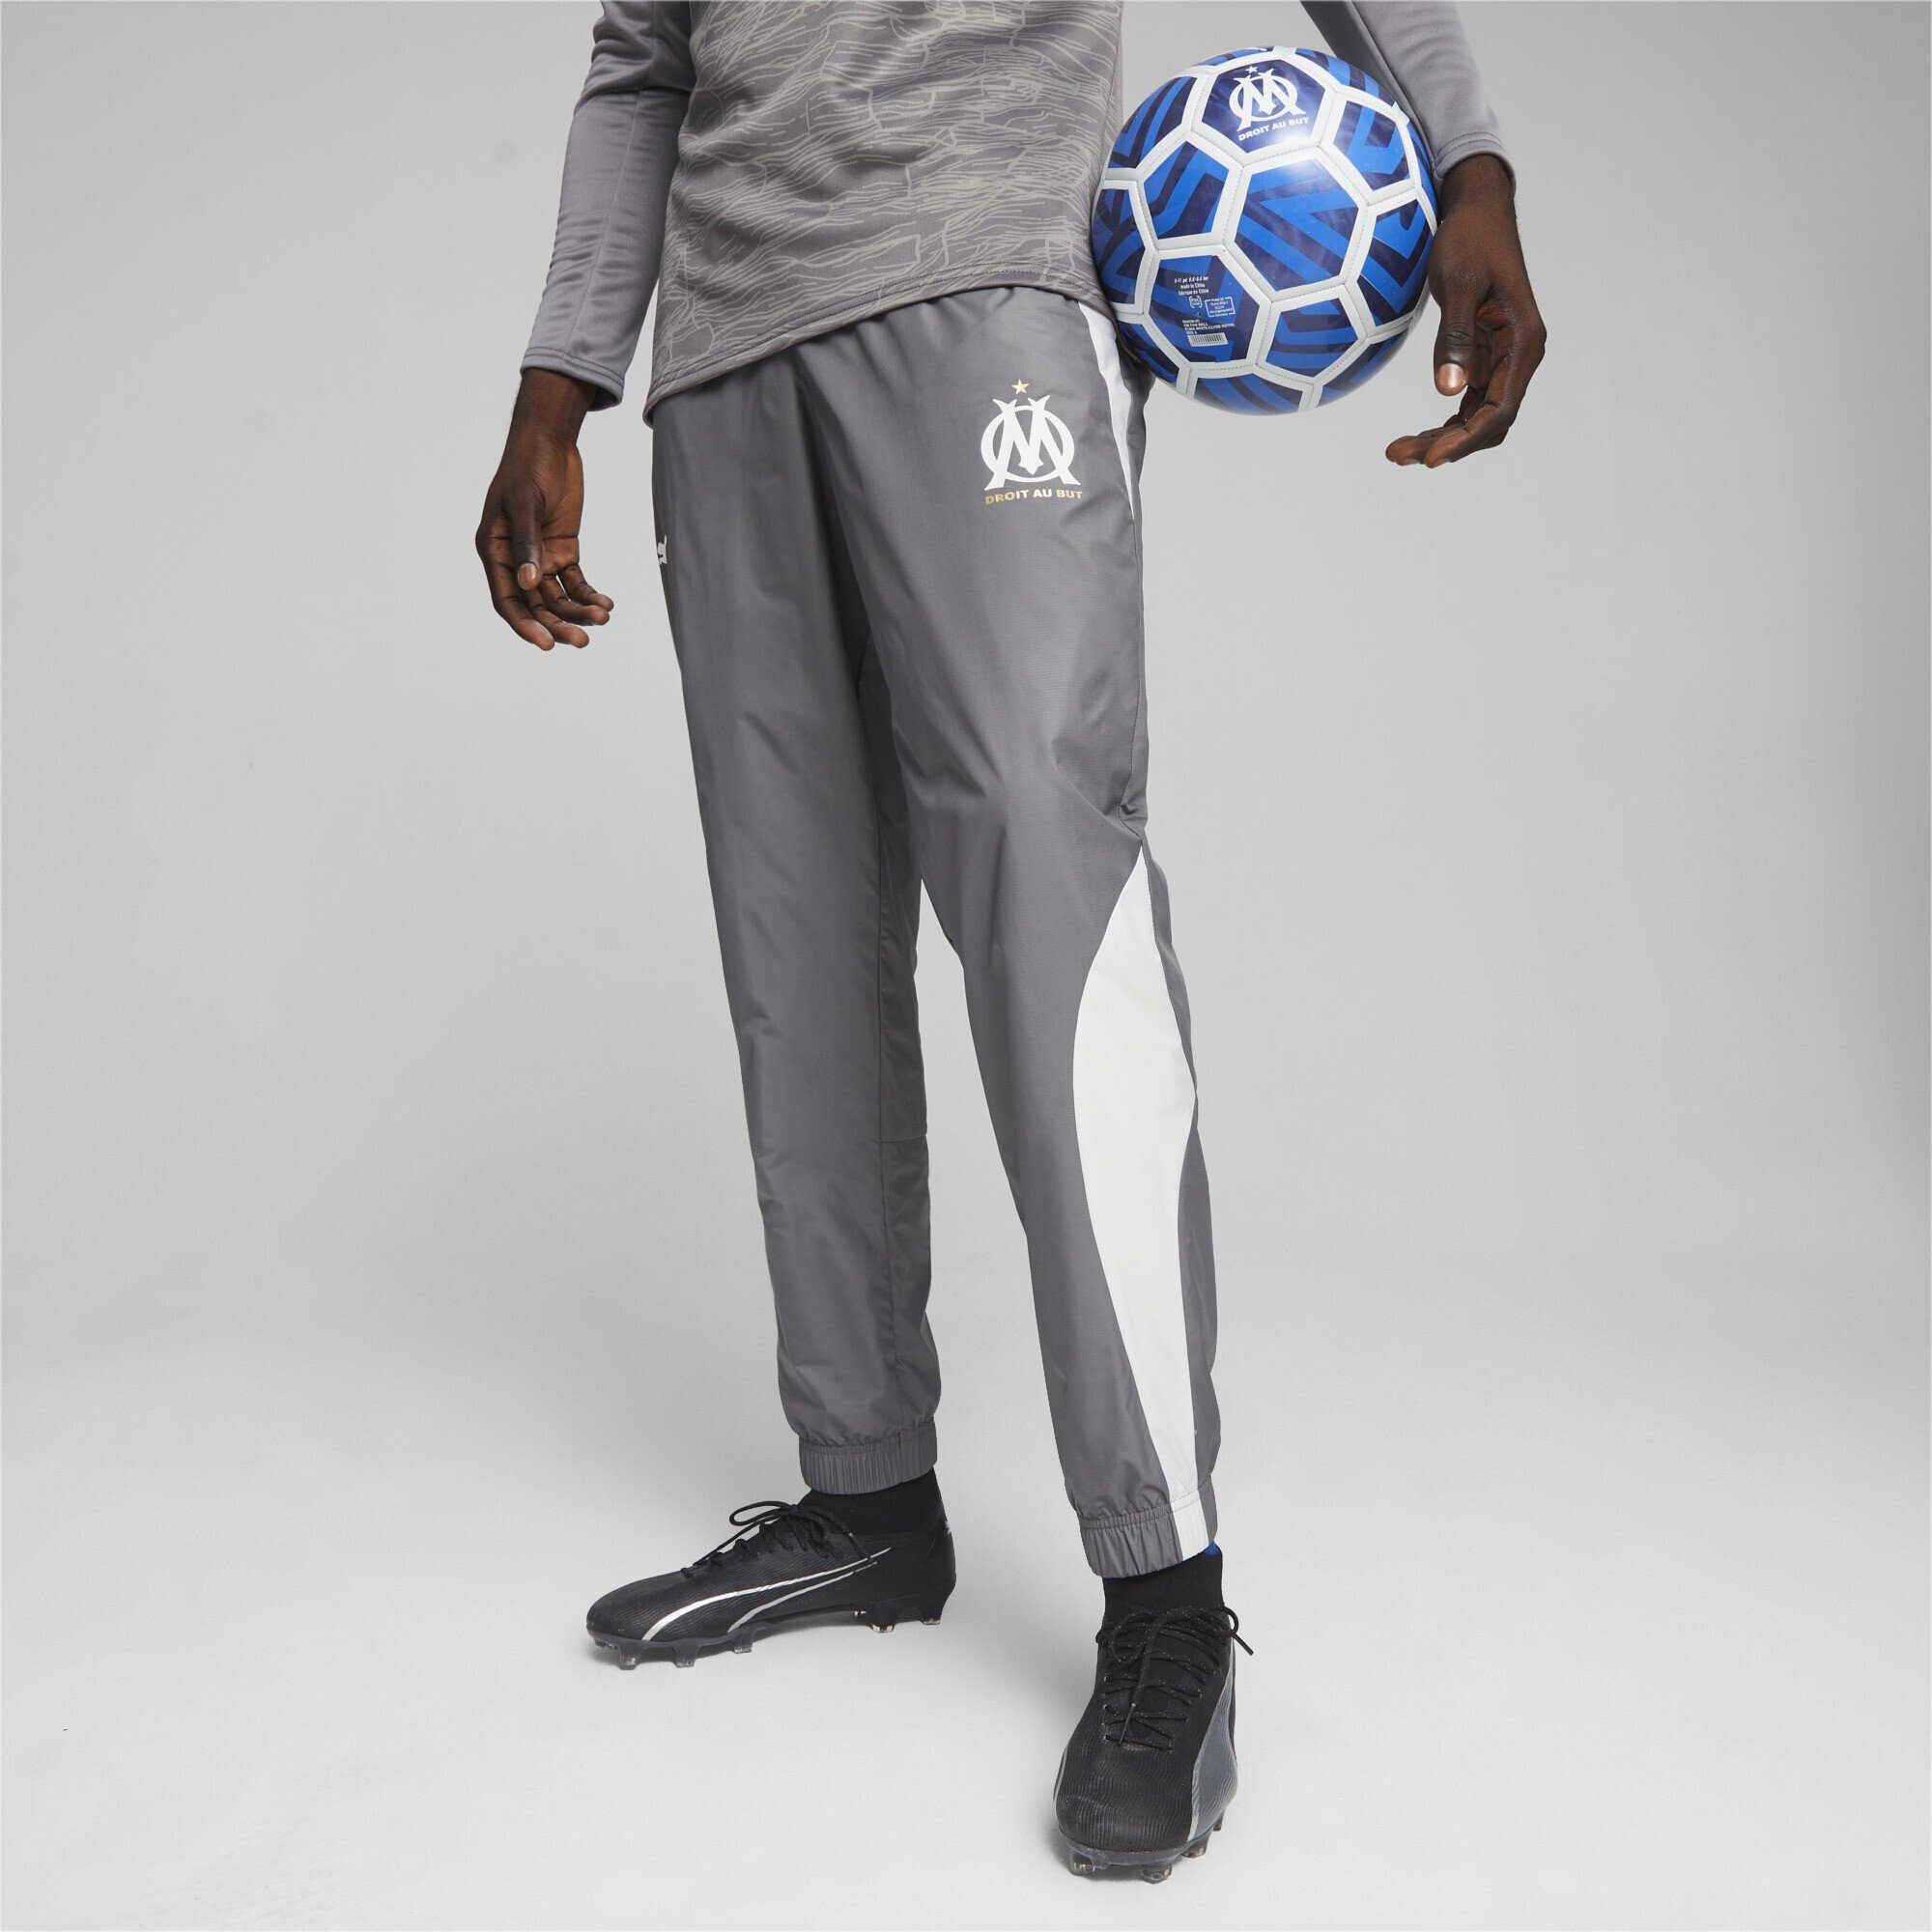 PUMA Sporthose Olympique de Marseille White Fußballhose Dark Gray Herren Cool Prematch